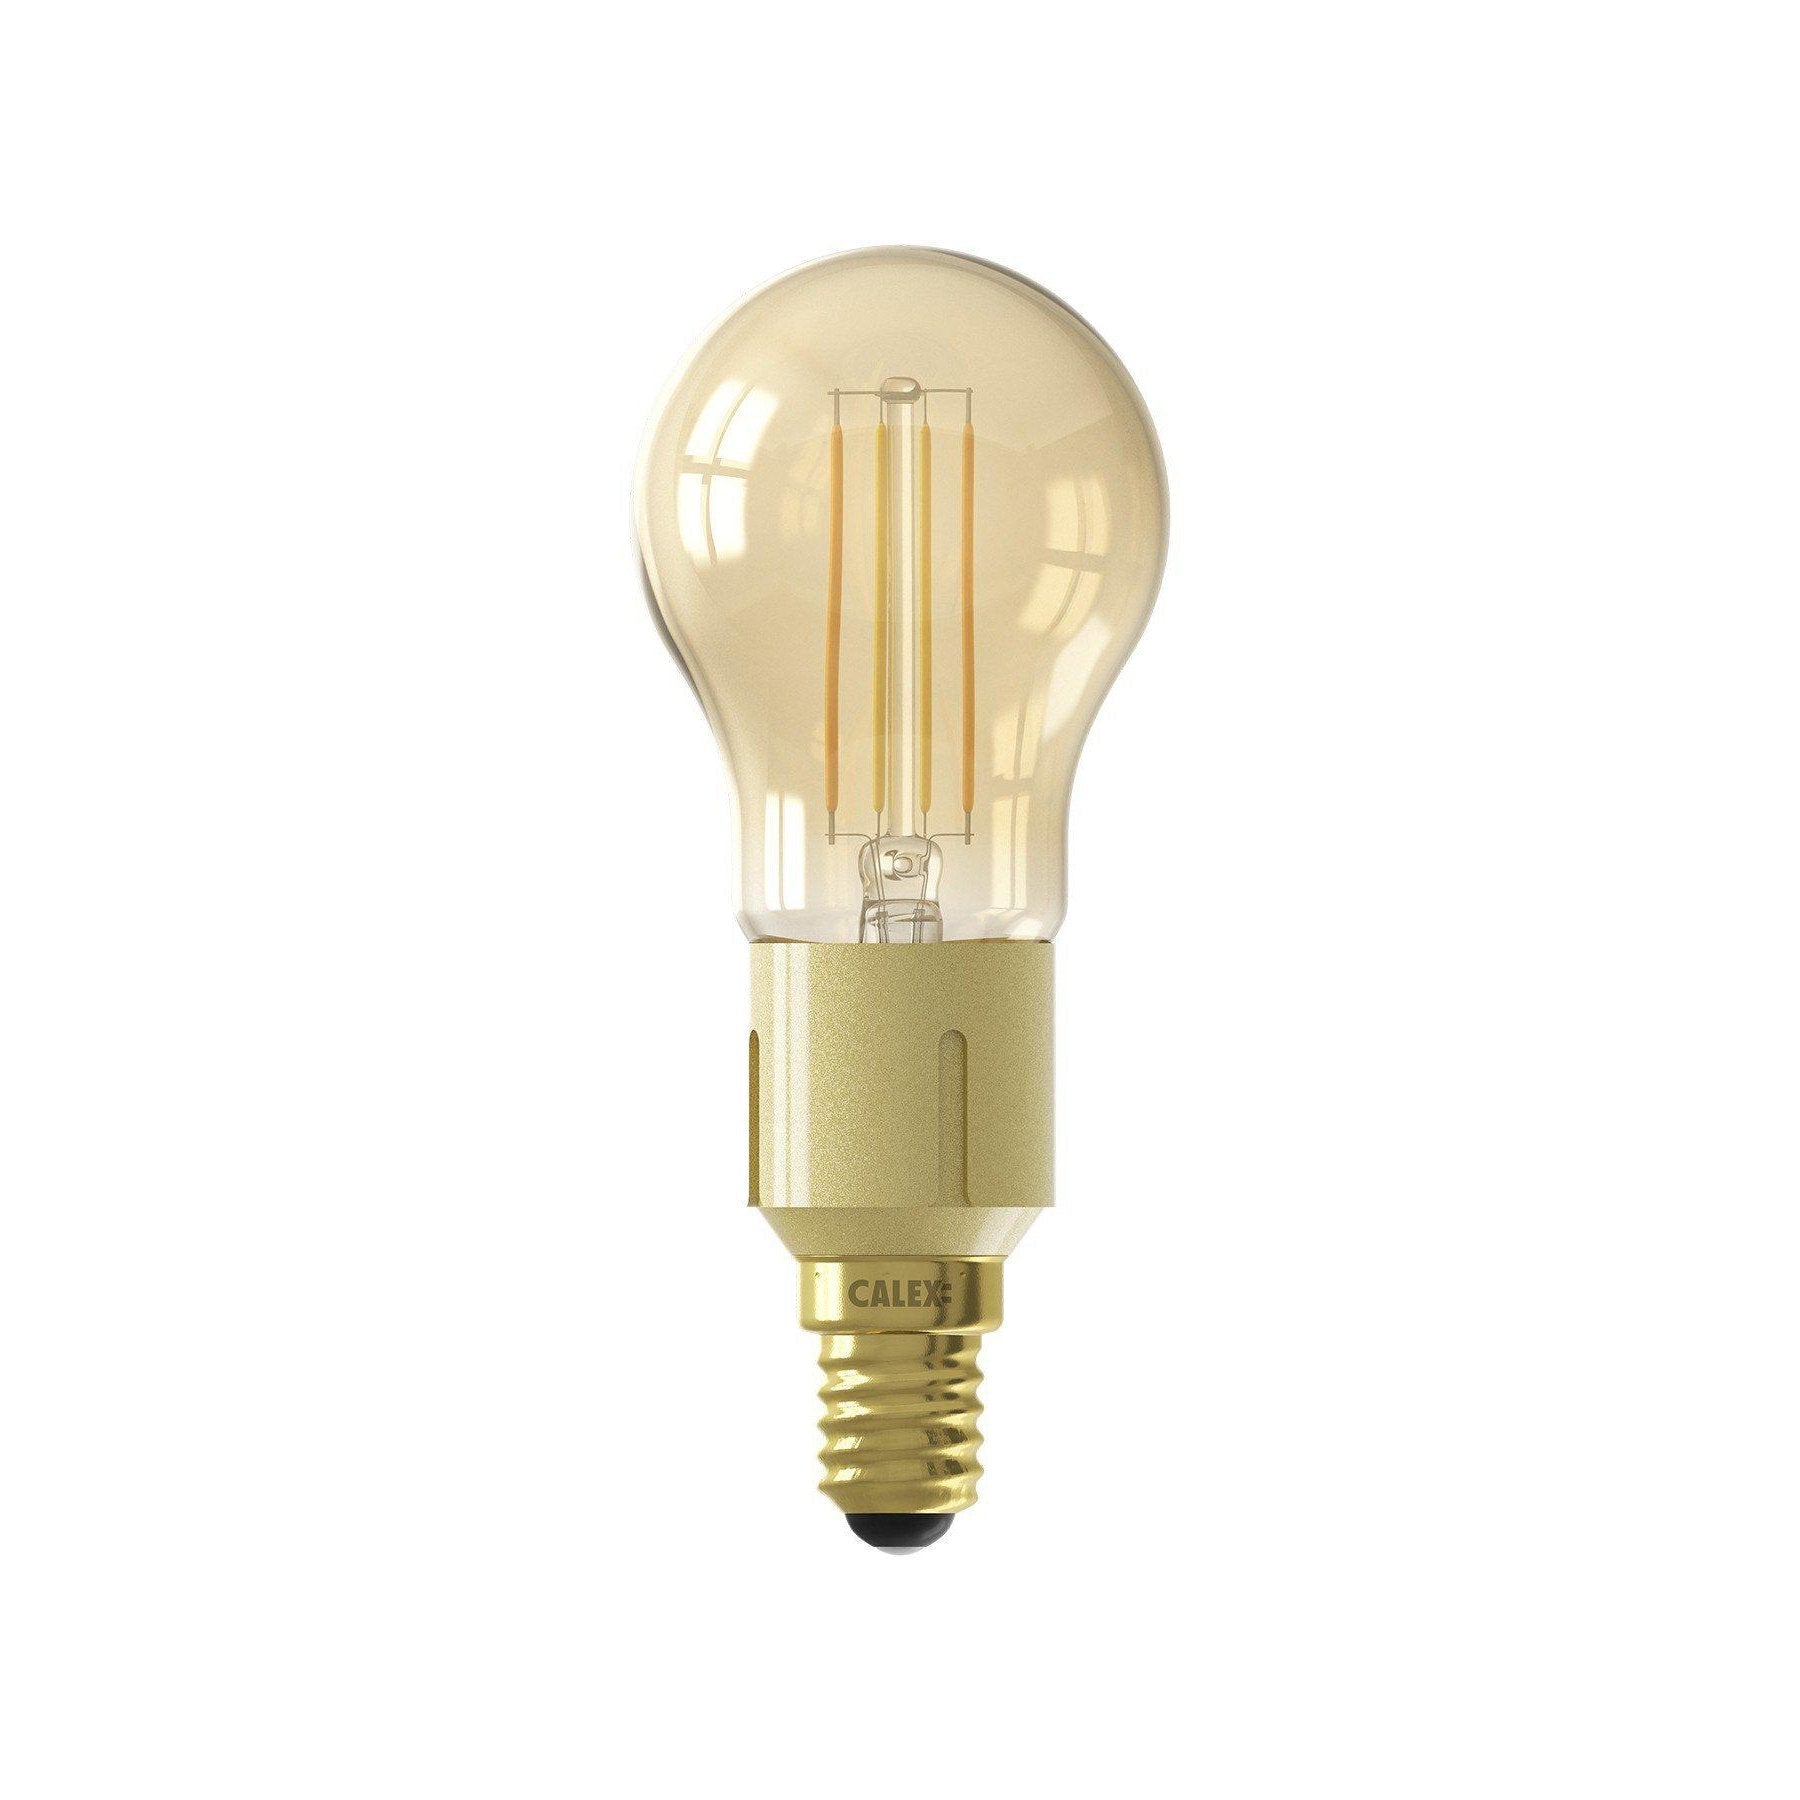 Ambassadeur Serie van Clam Calex smart led filament gold kogellamp p45 e14 220-240v 4.5W 400lm  1800-3000k